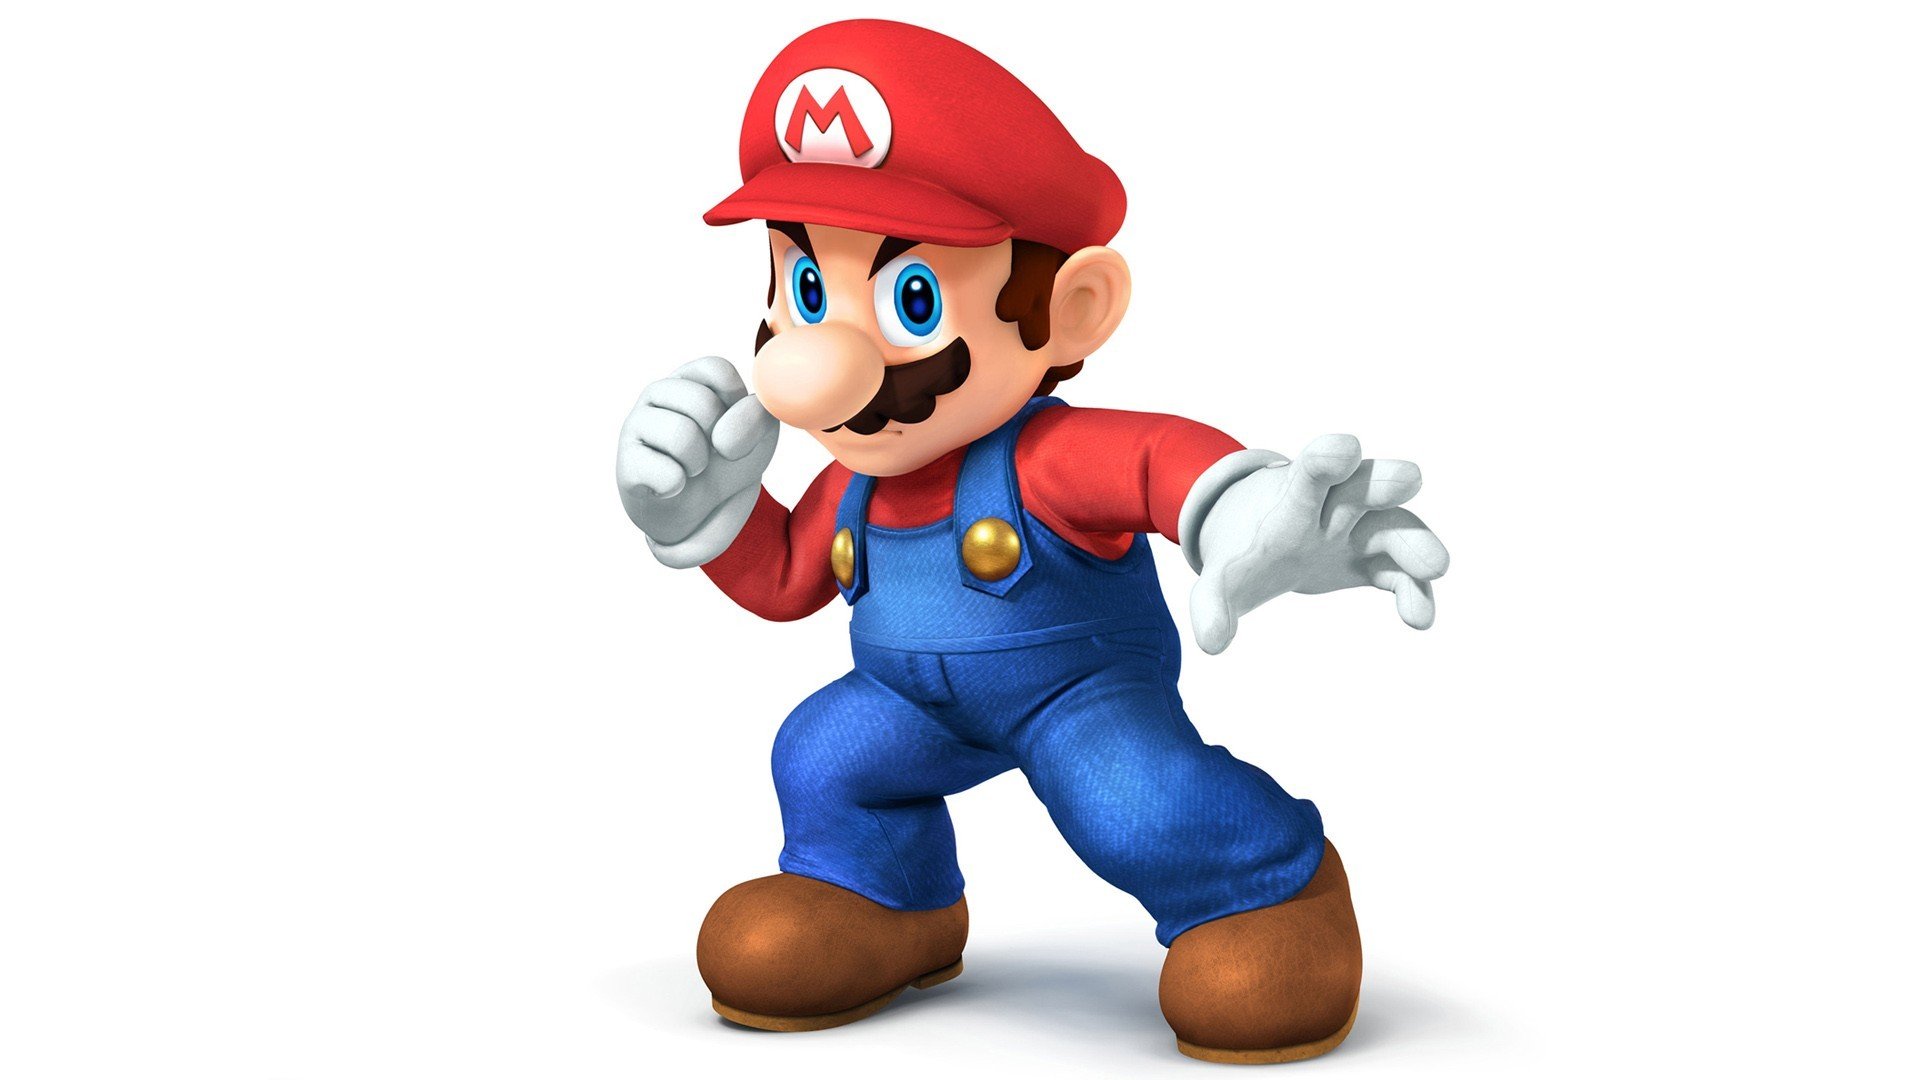 Game stick марио. Марио (персонаж игр). Супер Марио БРОС персонажи. Марио герой компьютерной игры. Марио из супер Марио БРОС.